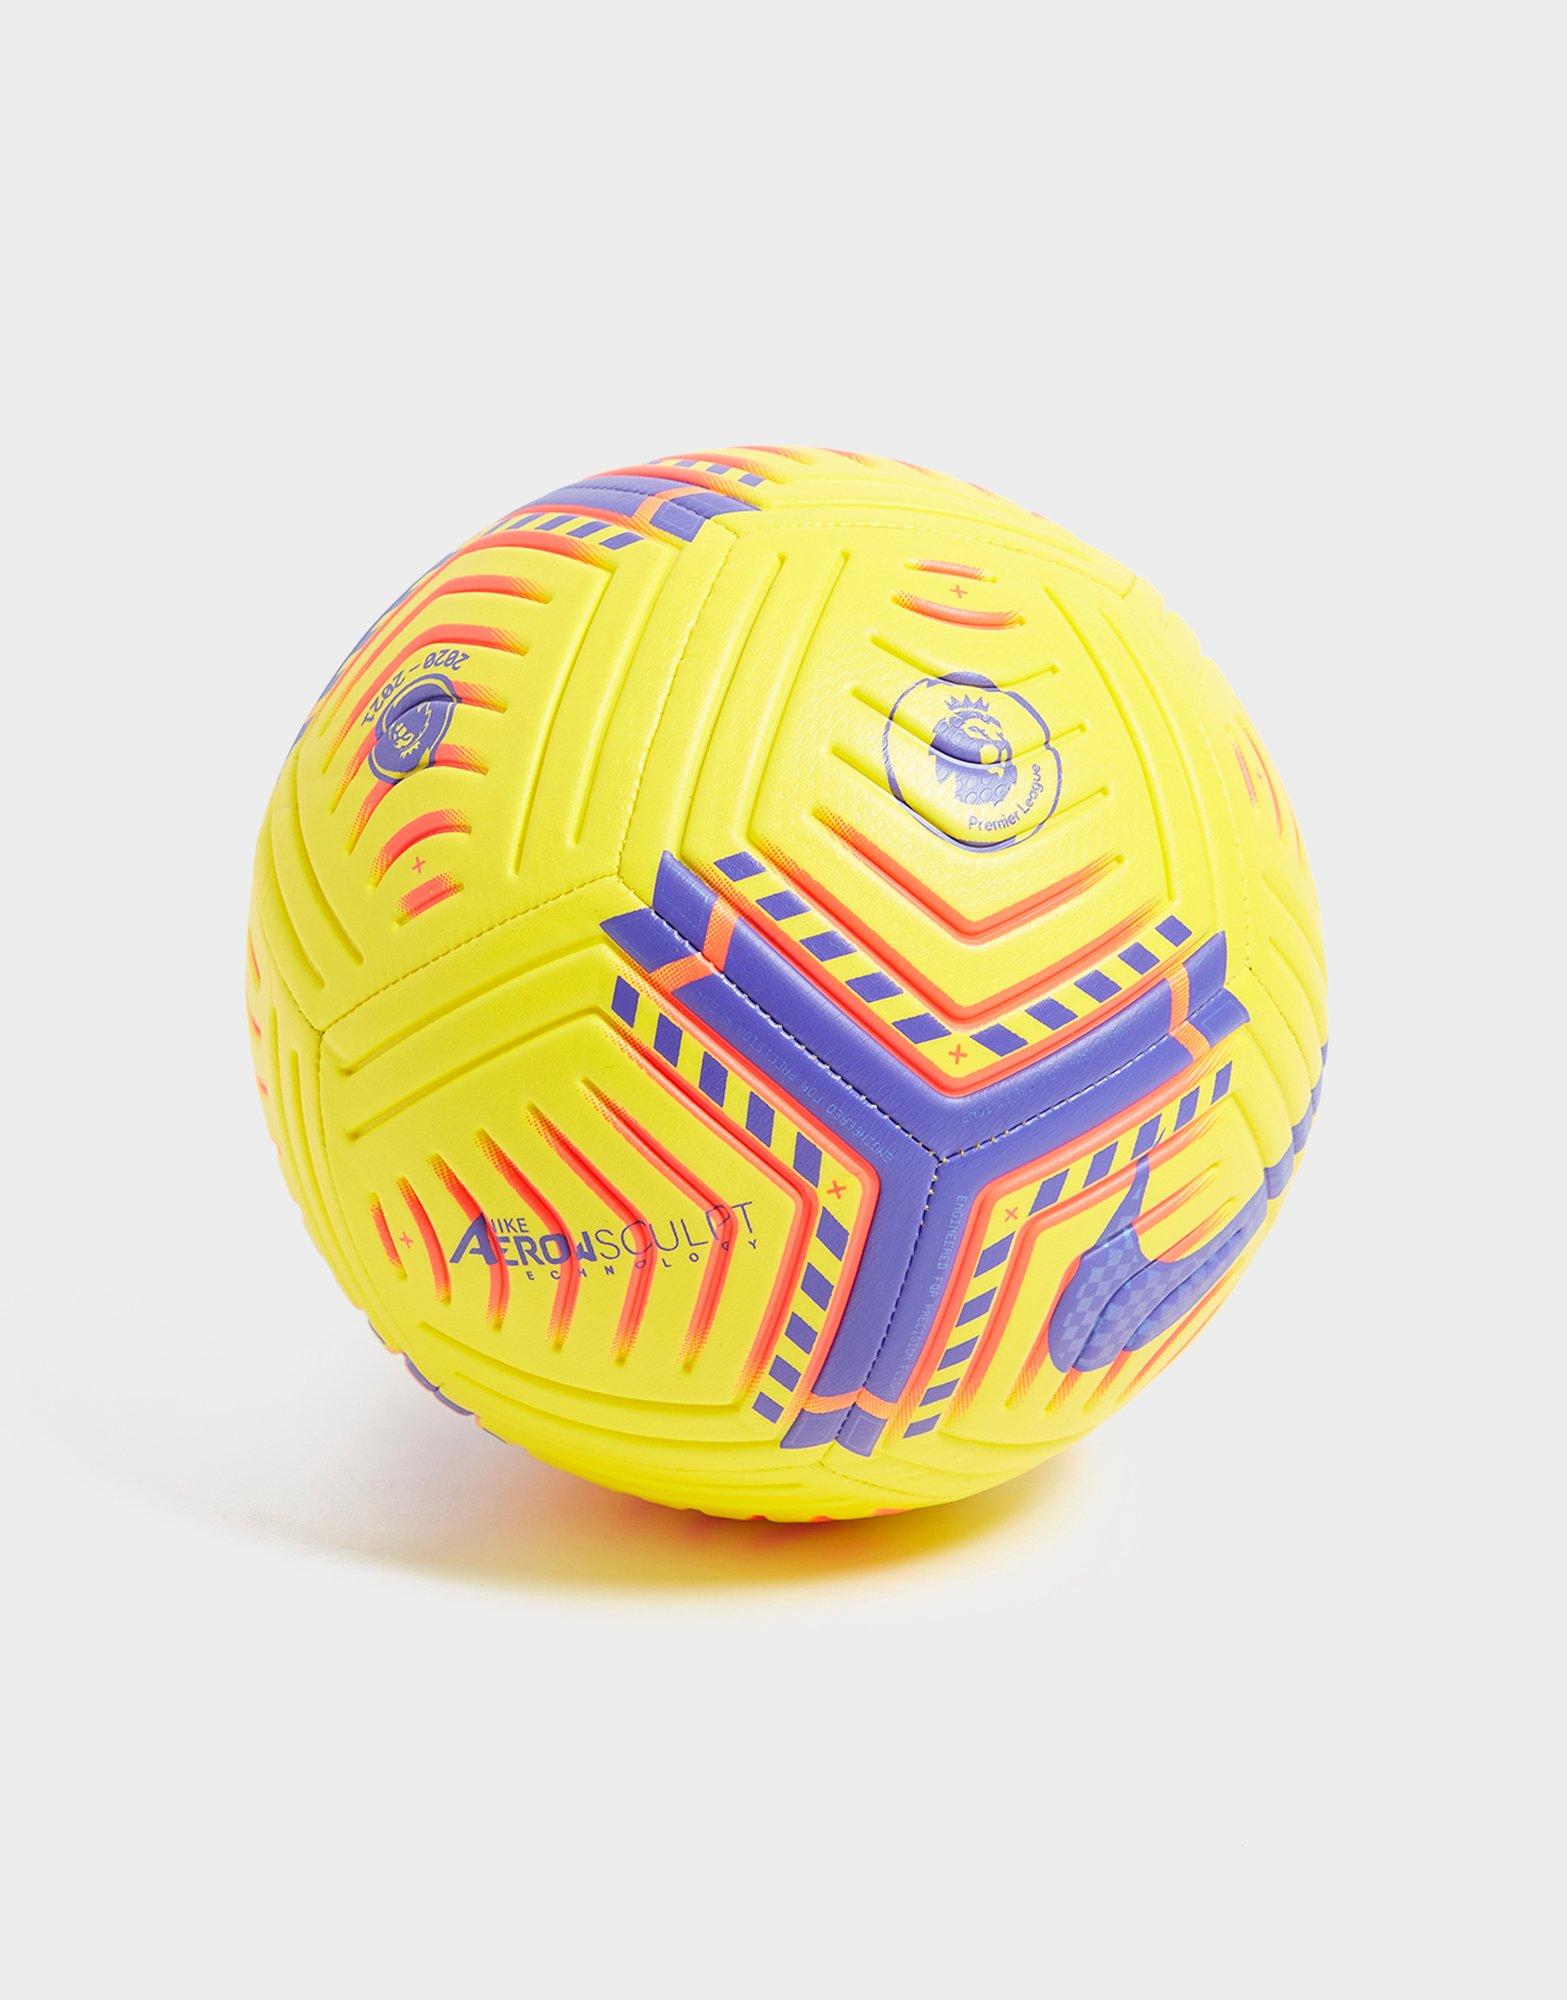 nike strike soccer ball size 4